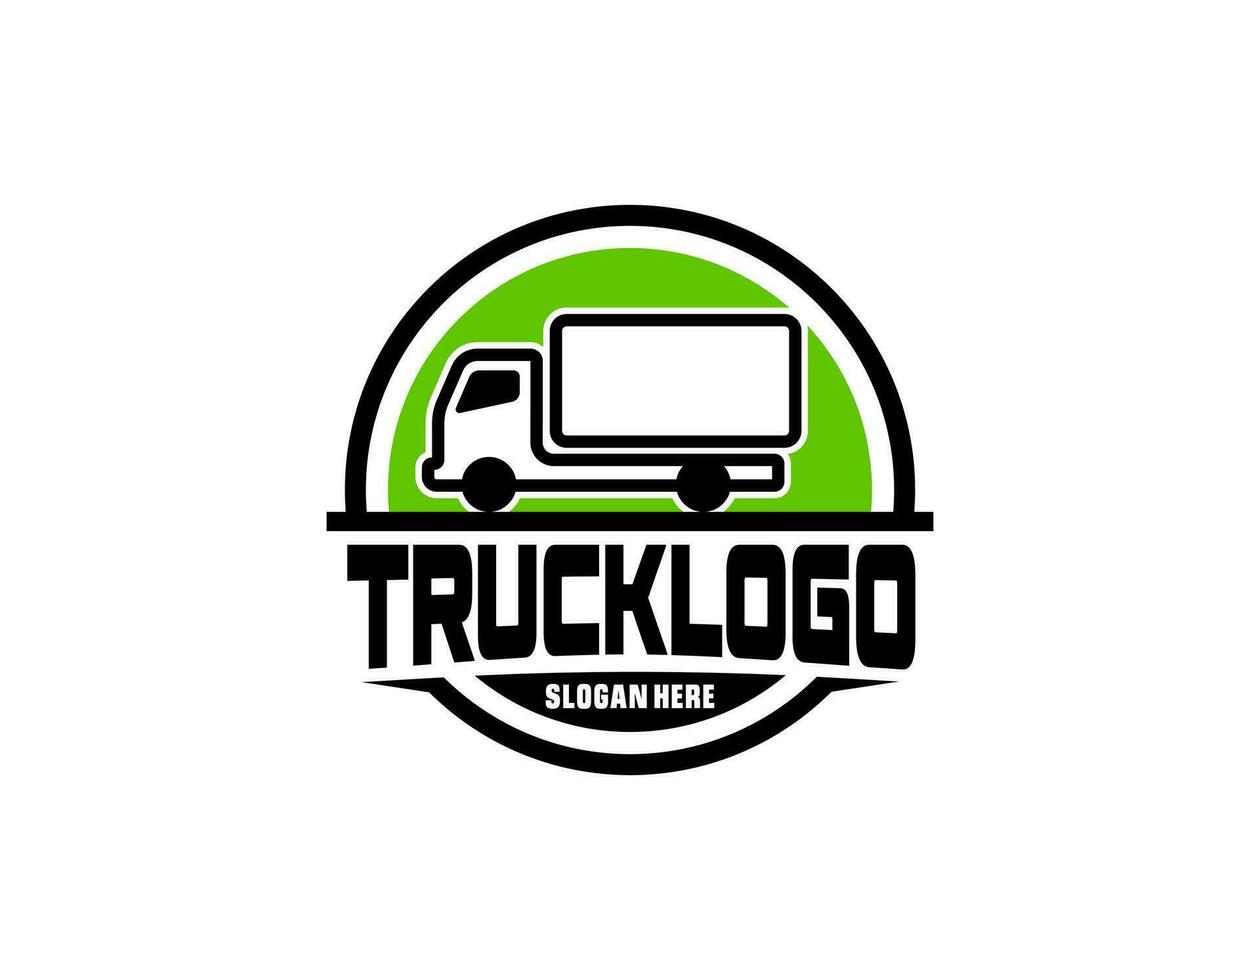 semi un camion logo. camionnage entreprise logo. prime logo vecteur